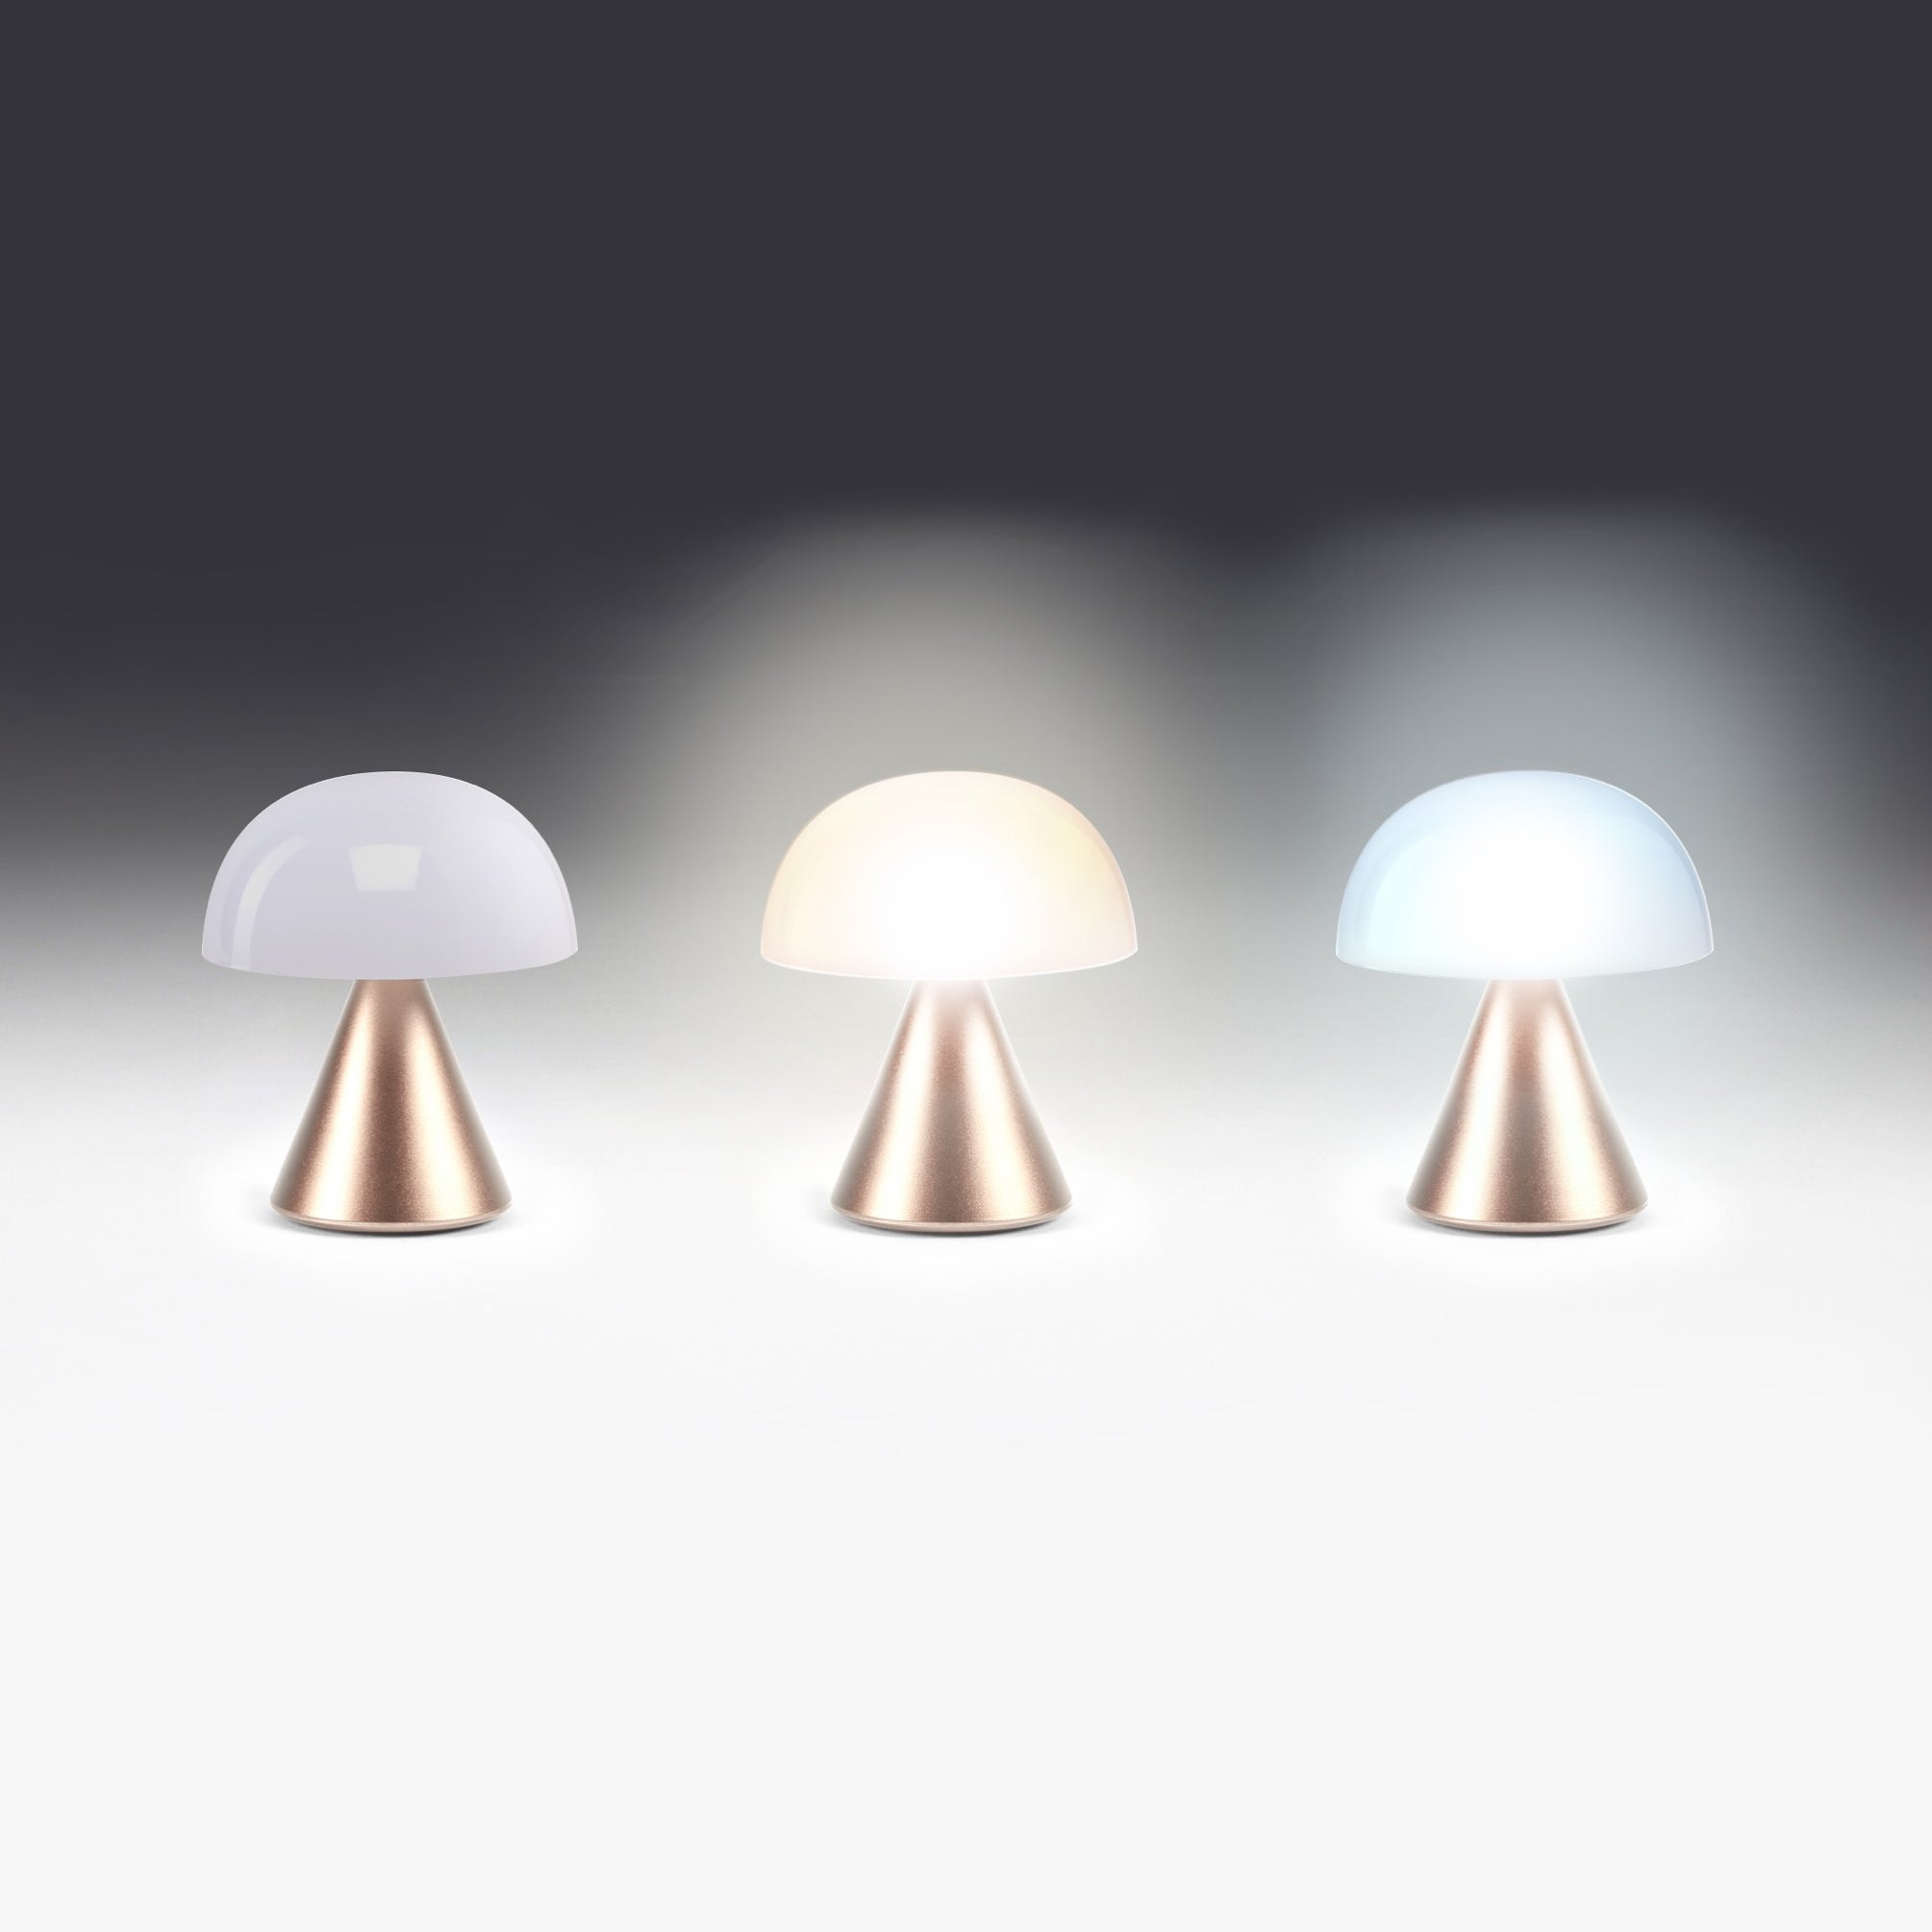 Lexon Mina Small Soft Gold│Oplaadbare LED lamp│art. LH60MD│warm en koud licht en licht uit naast elkaar